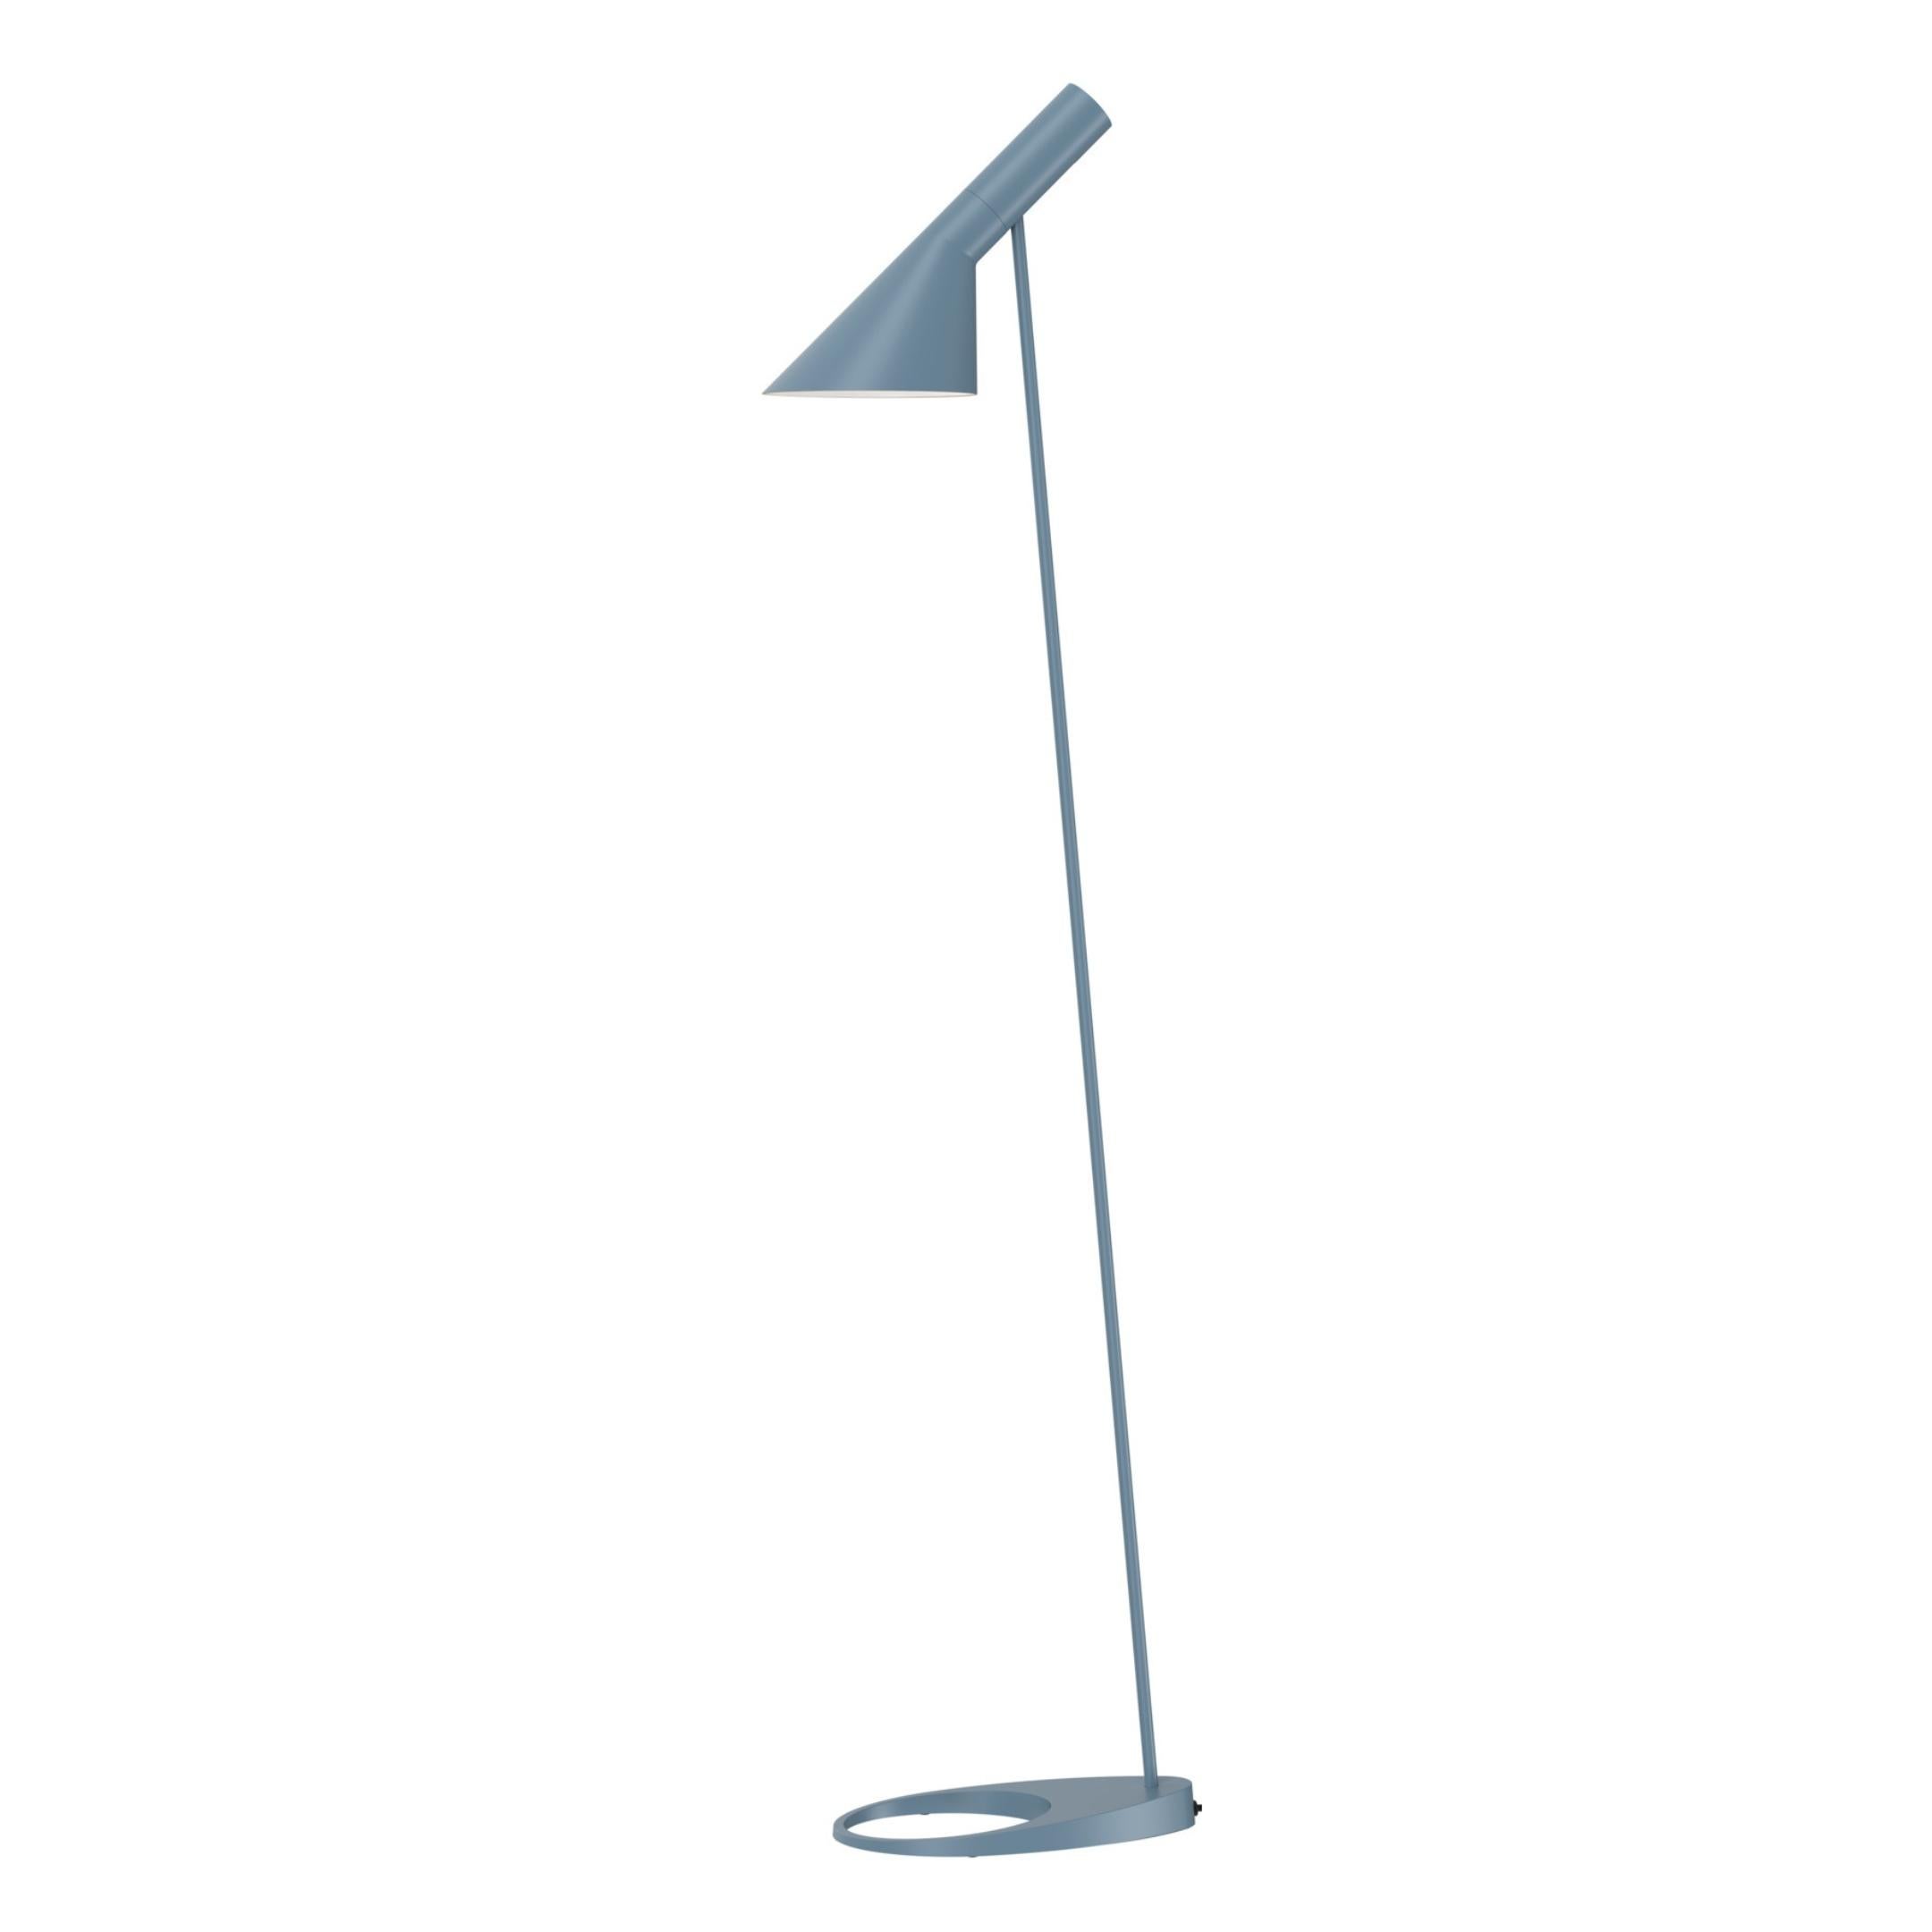 Arne Jacobsen AJ Floor Lamp in Warm Grey for Louis Poulsen For Sale 7